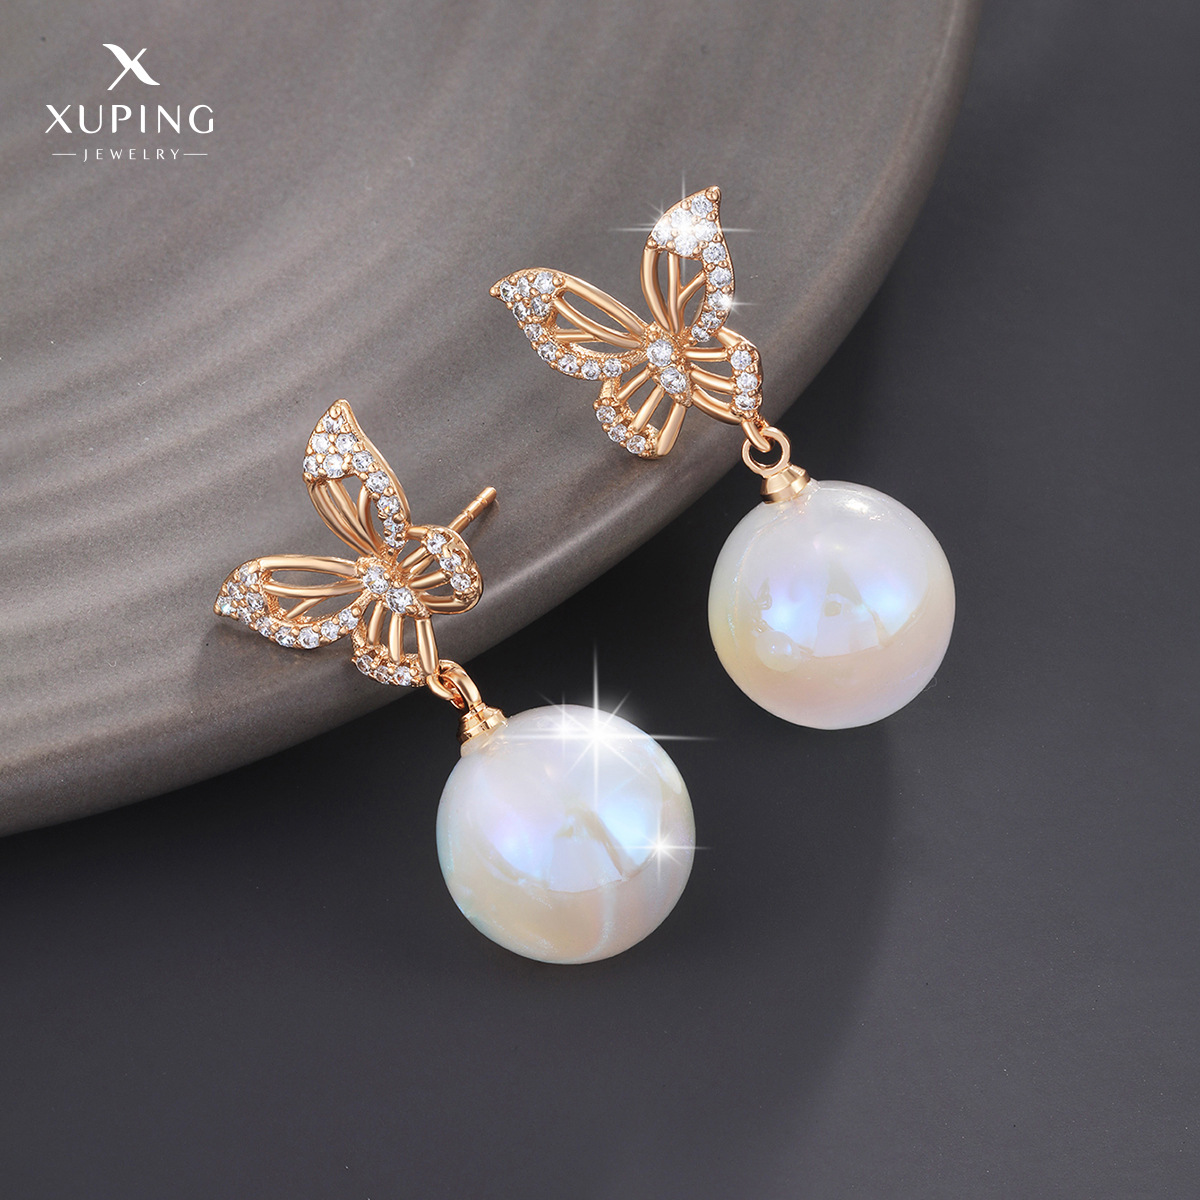 xuping jewelry new butterfly mermaid artificial pearl earrings women‘s simple atmosphere gentle graceful earrings wholesale